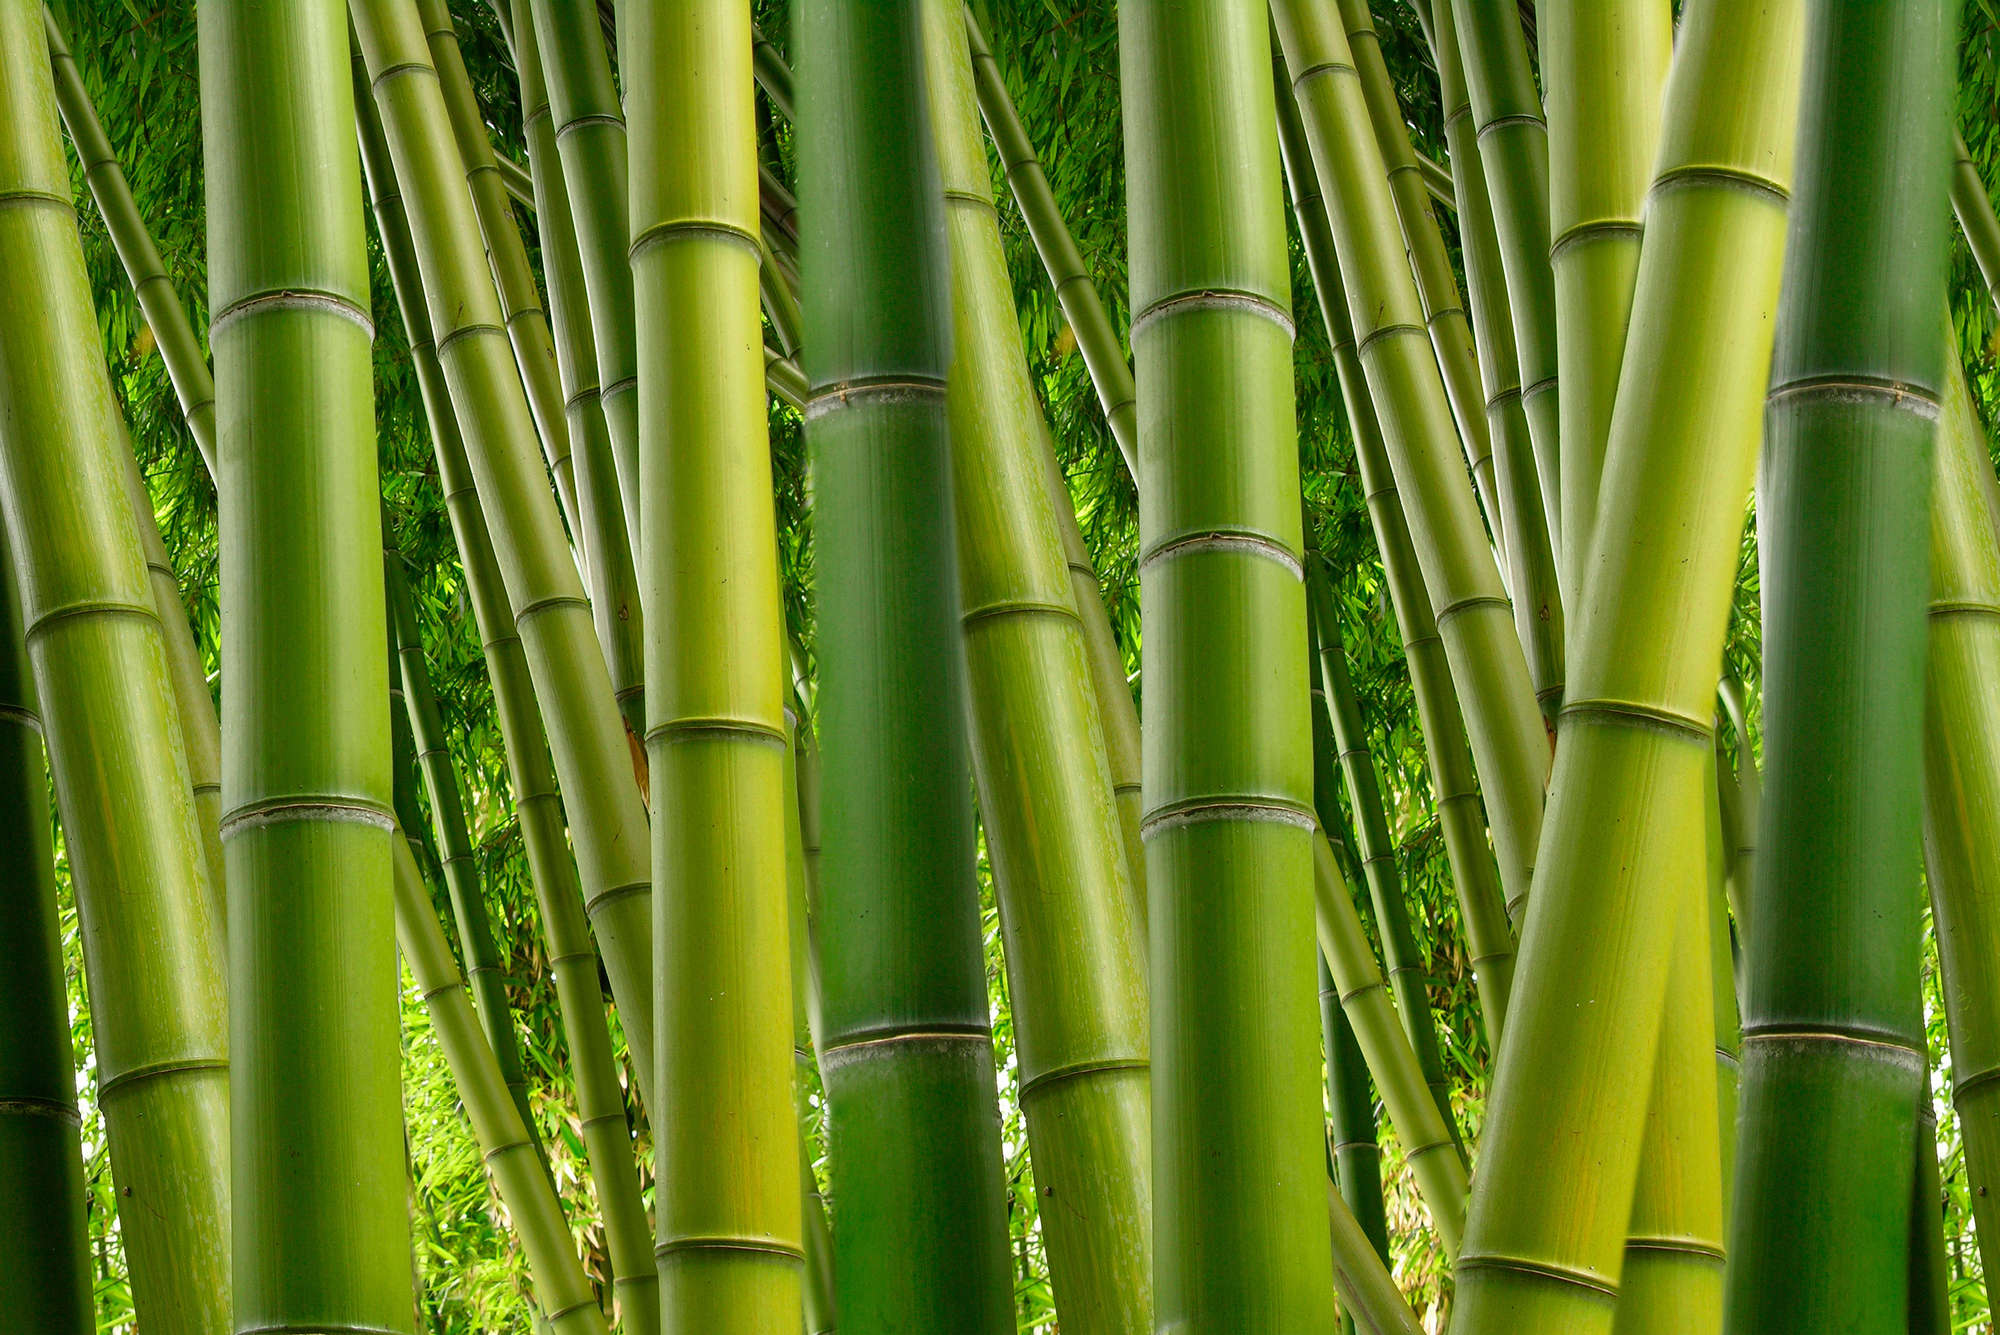             Nature wall mural bamboo forest motif on matt smooth non-woven
        